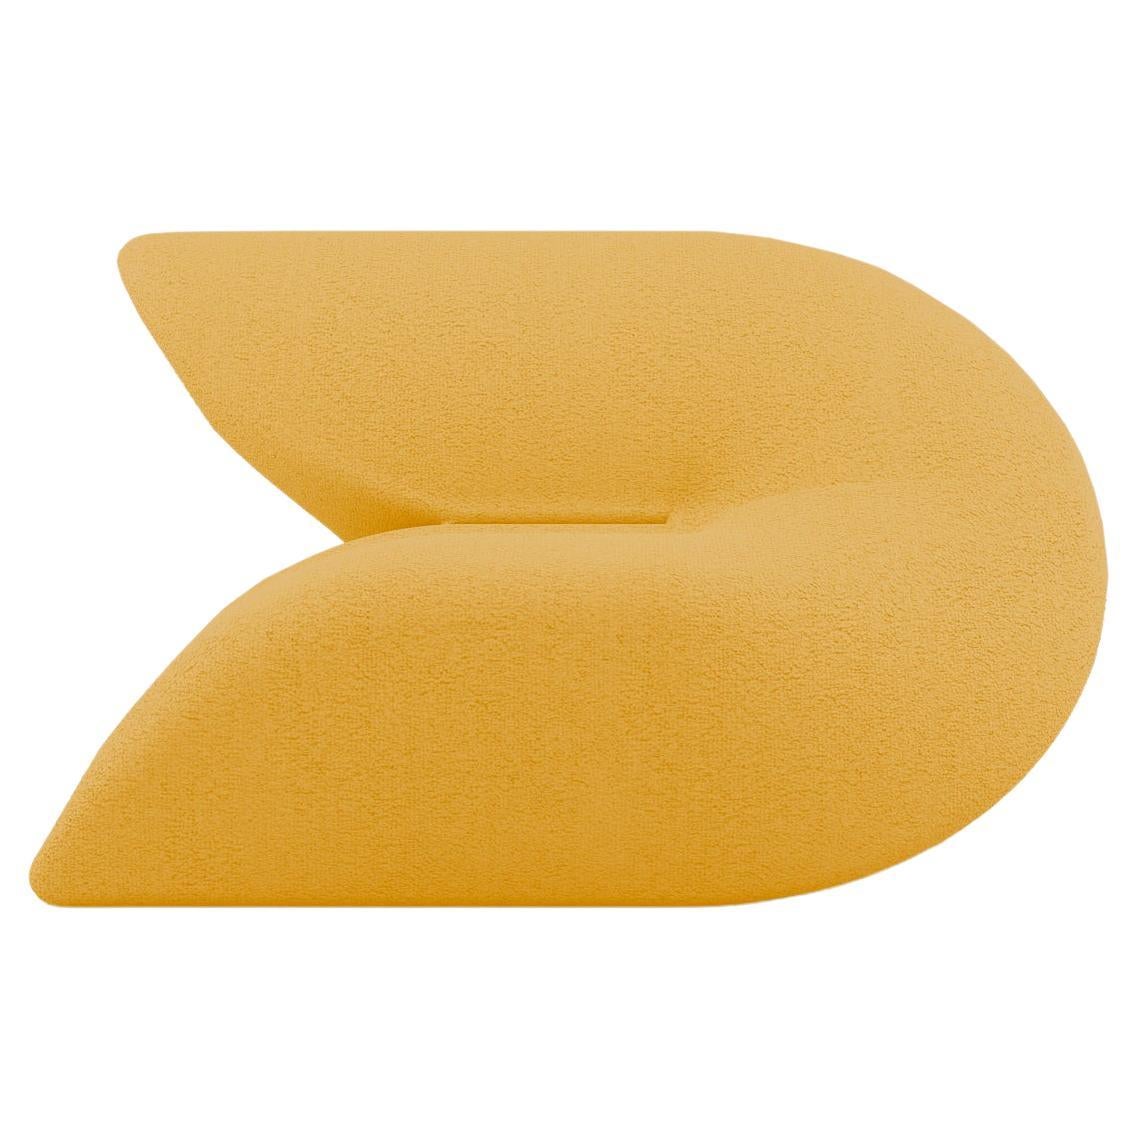 Delta Armchair - Modern Lemon Yellow Upholstered Armchair For Sale